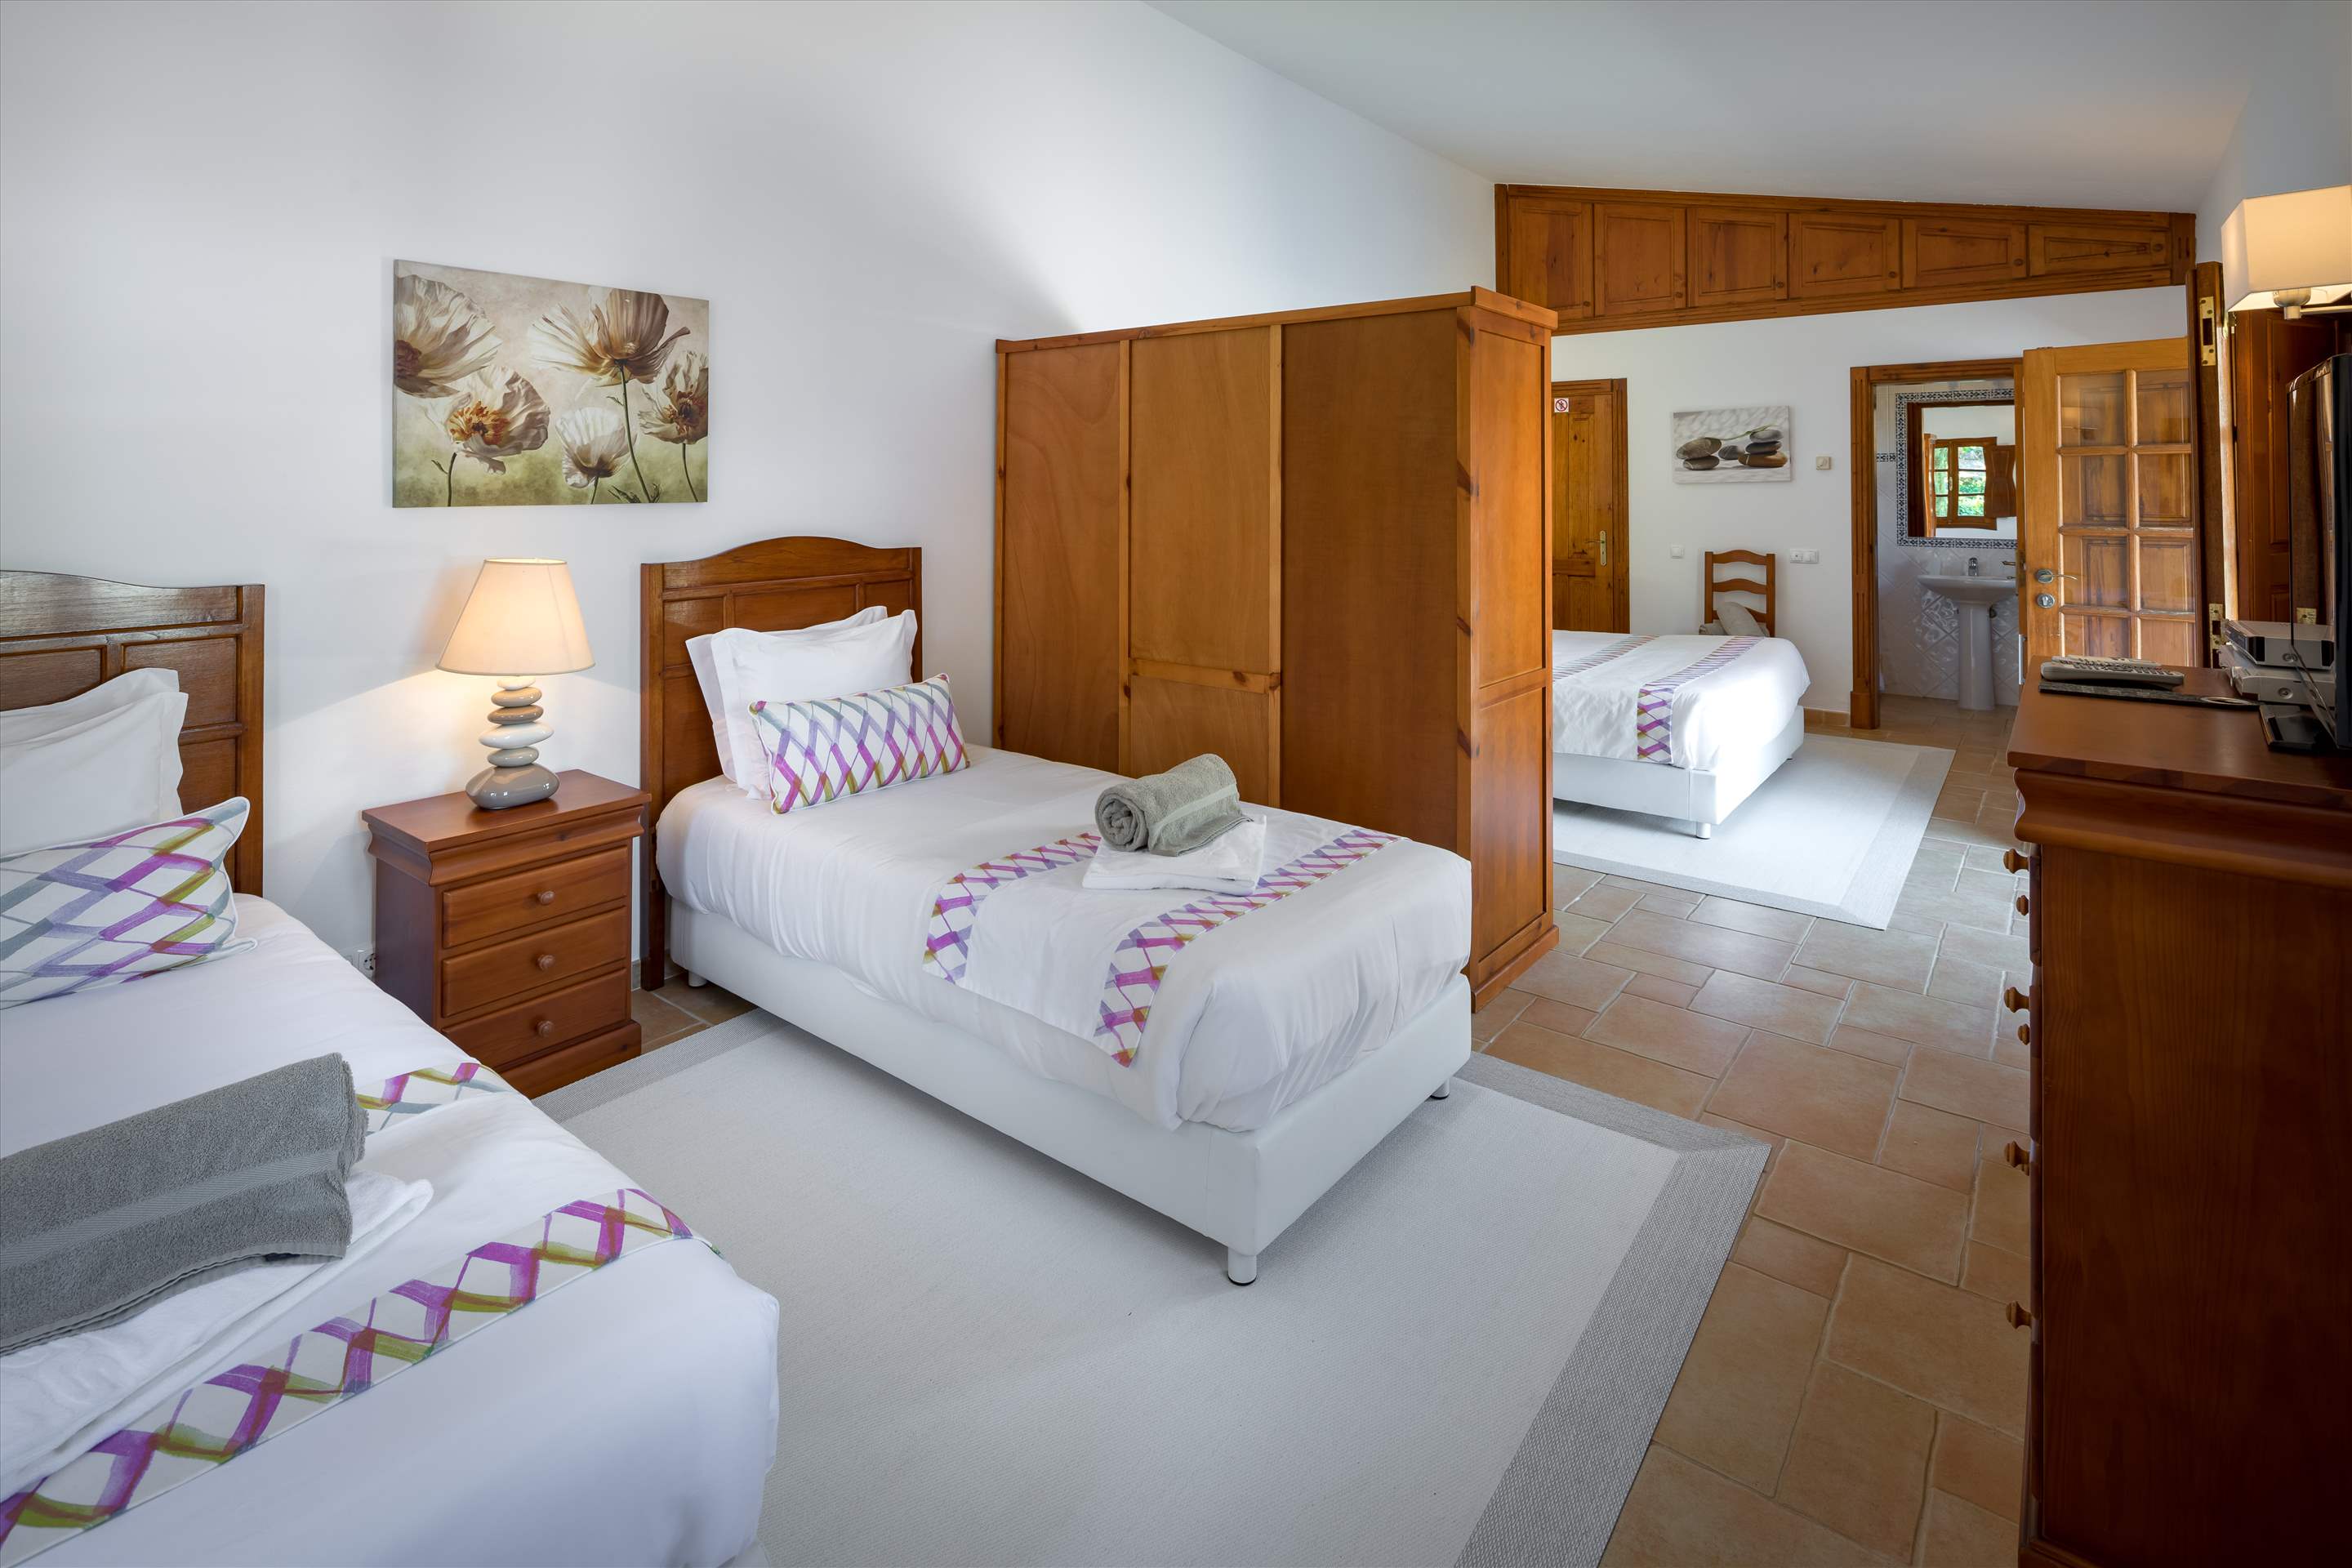 Casa do Ingles, up to 6 persons, 3 bedroom villa in Vilamoura Area, Algarve Photo #14